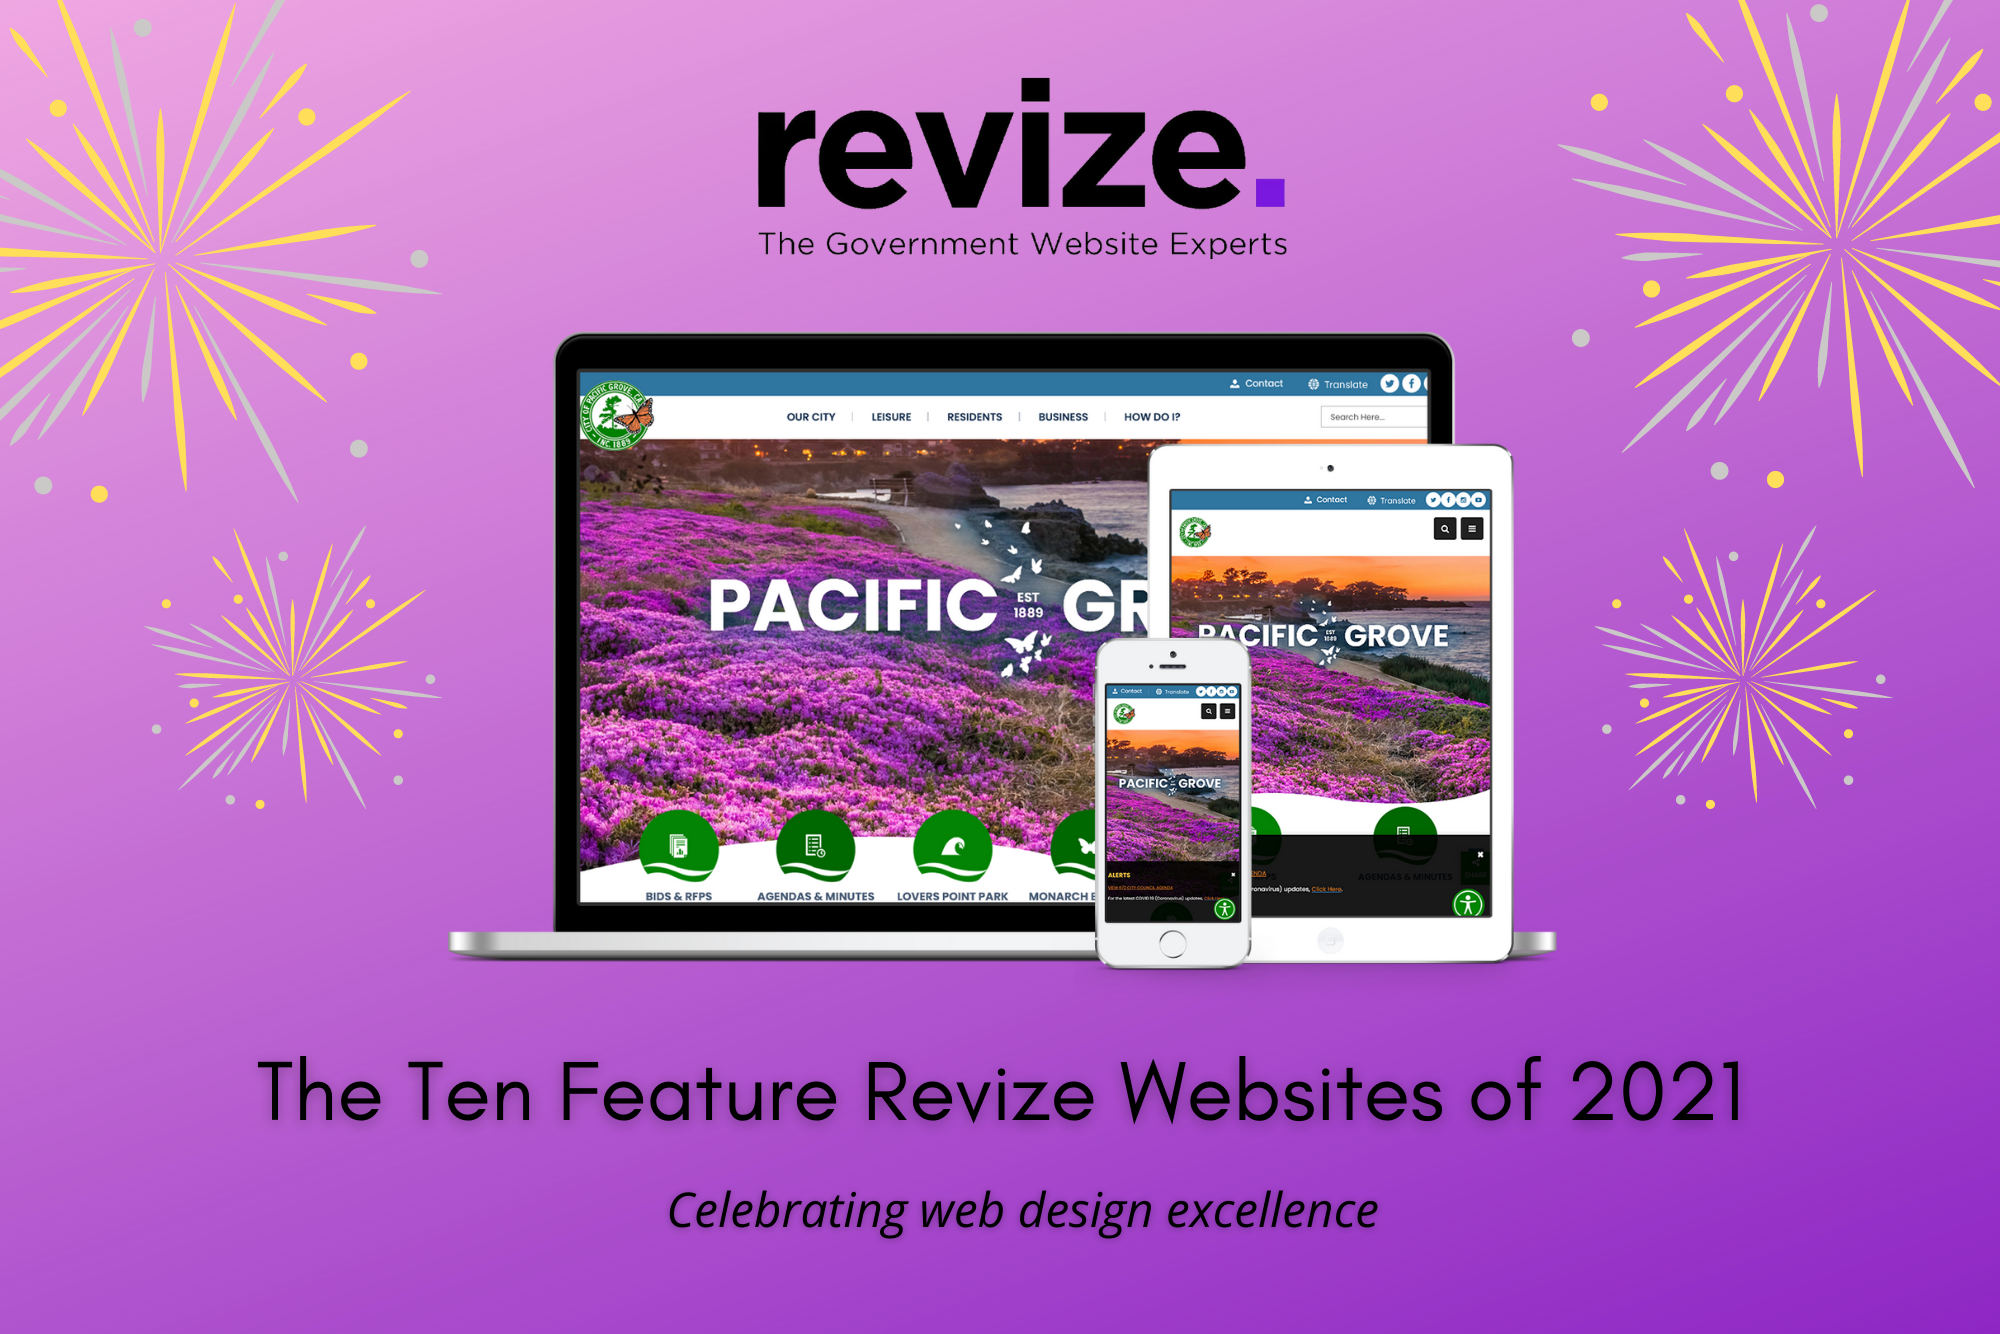 The Ten Feature Revize Websites of 2021